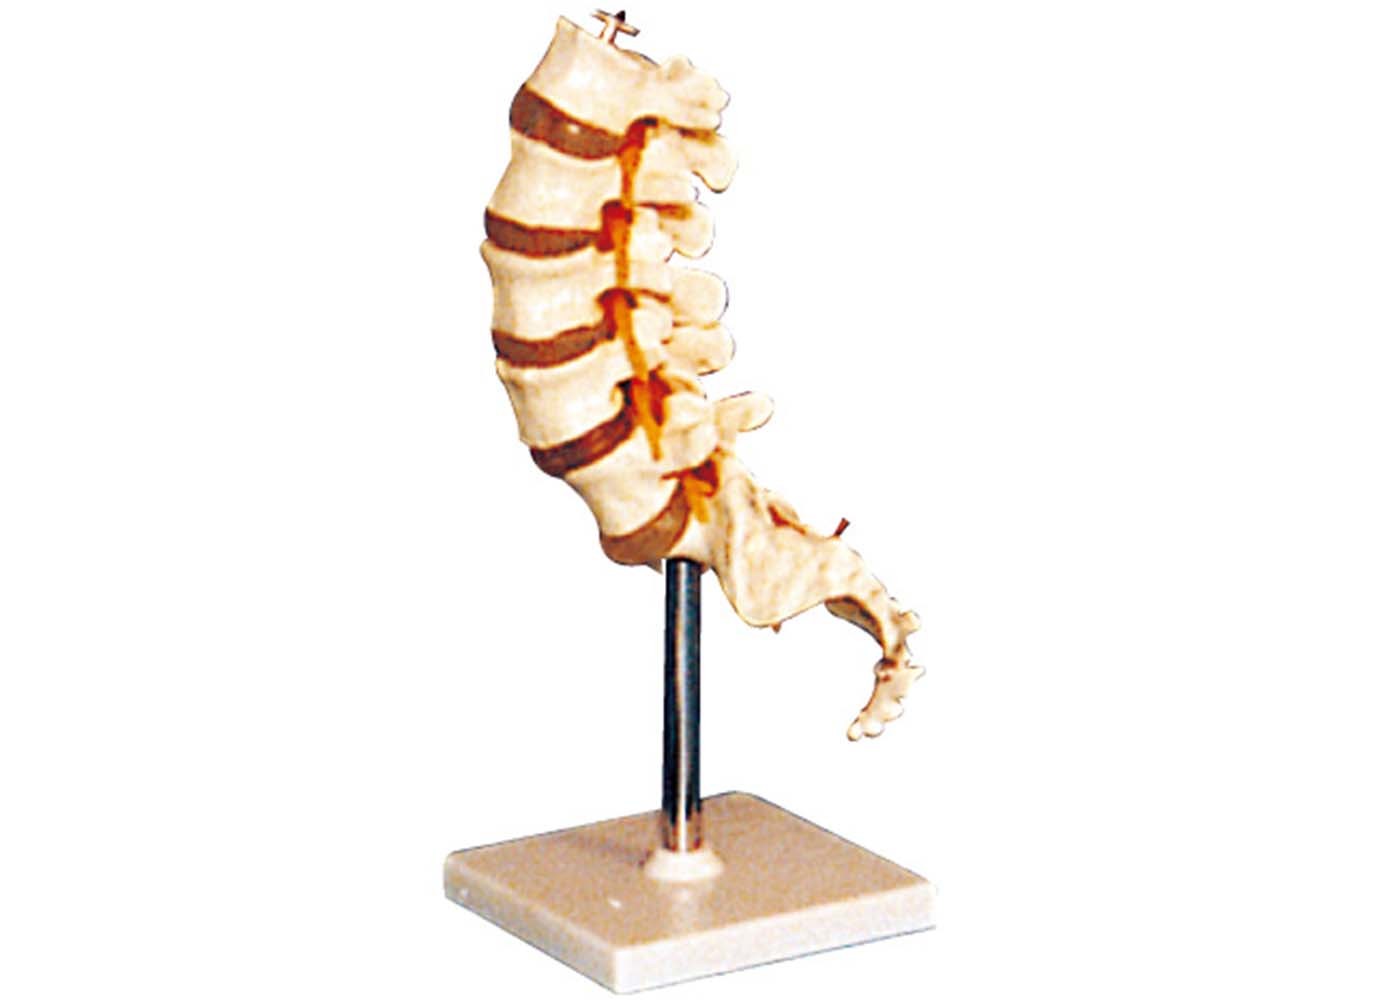 Lumbar Vertebra fixed on base plate   Human Anatomy Model  for college training